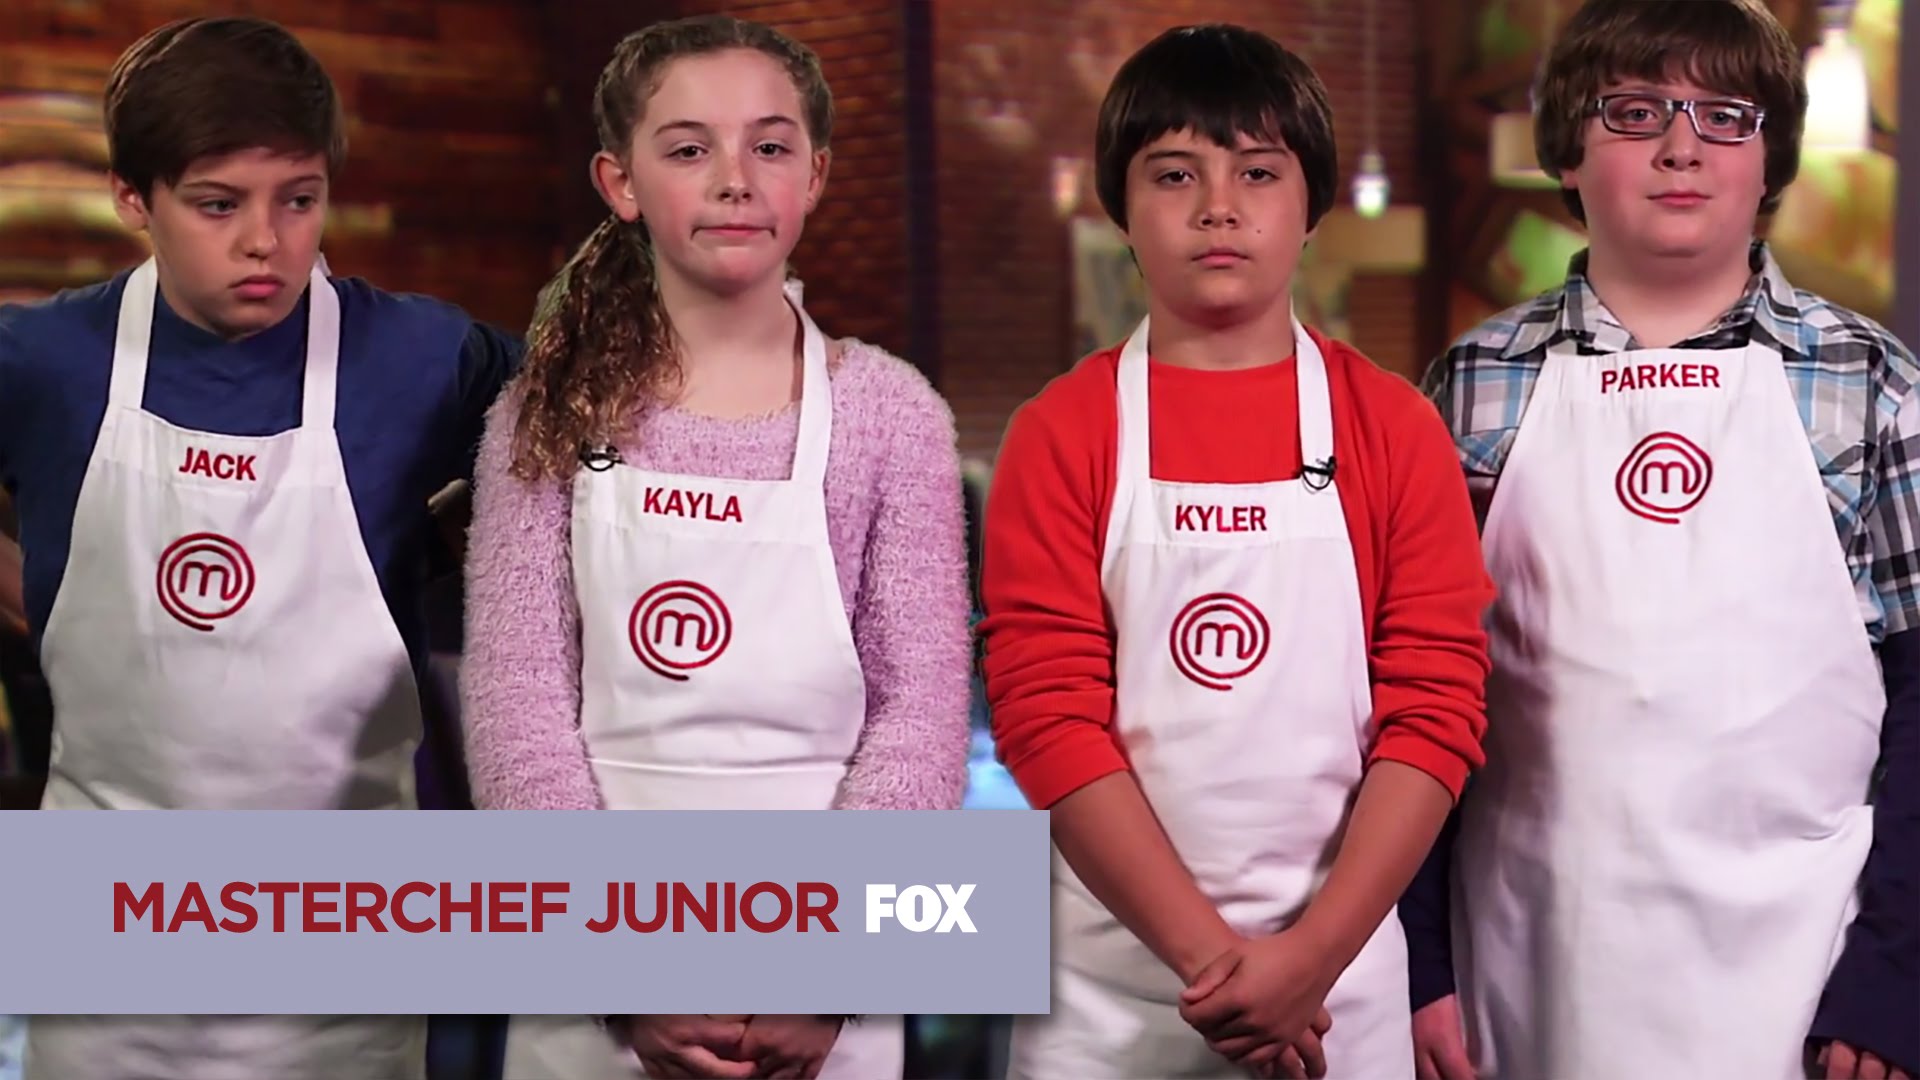 Meet The Junior Chefs: Jack, Kayla, Kyler And Parker Masterc